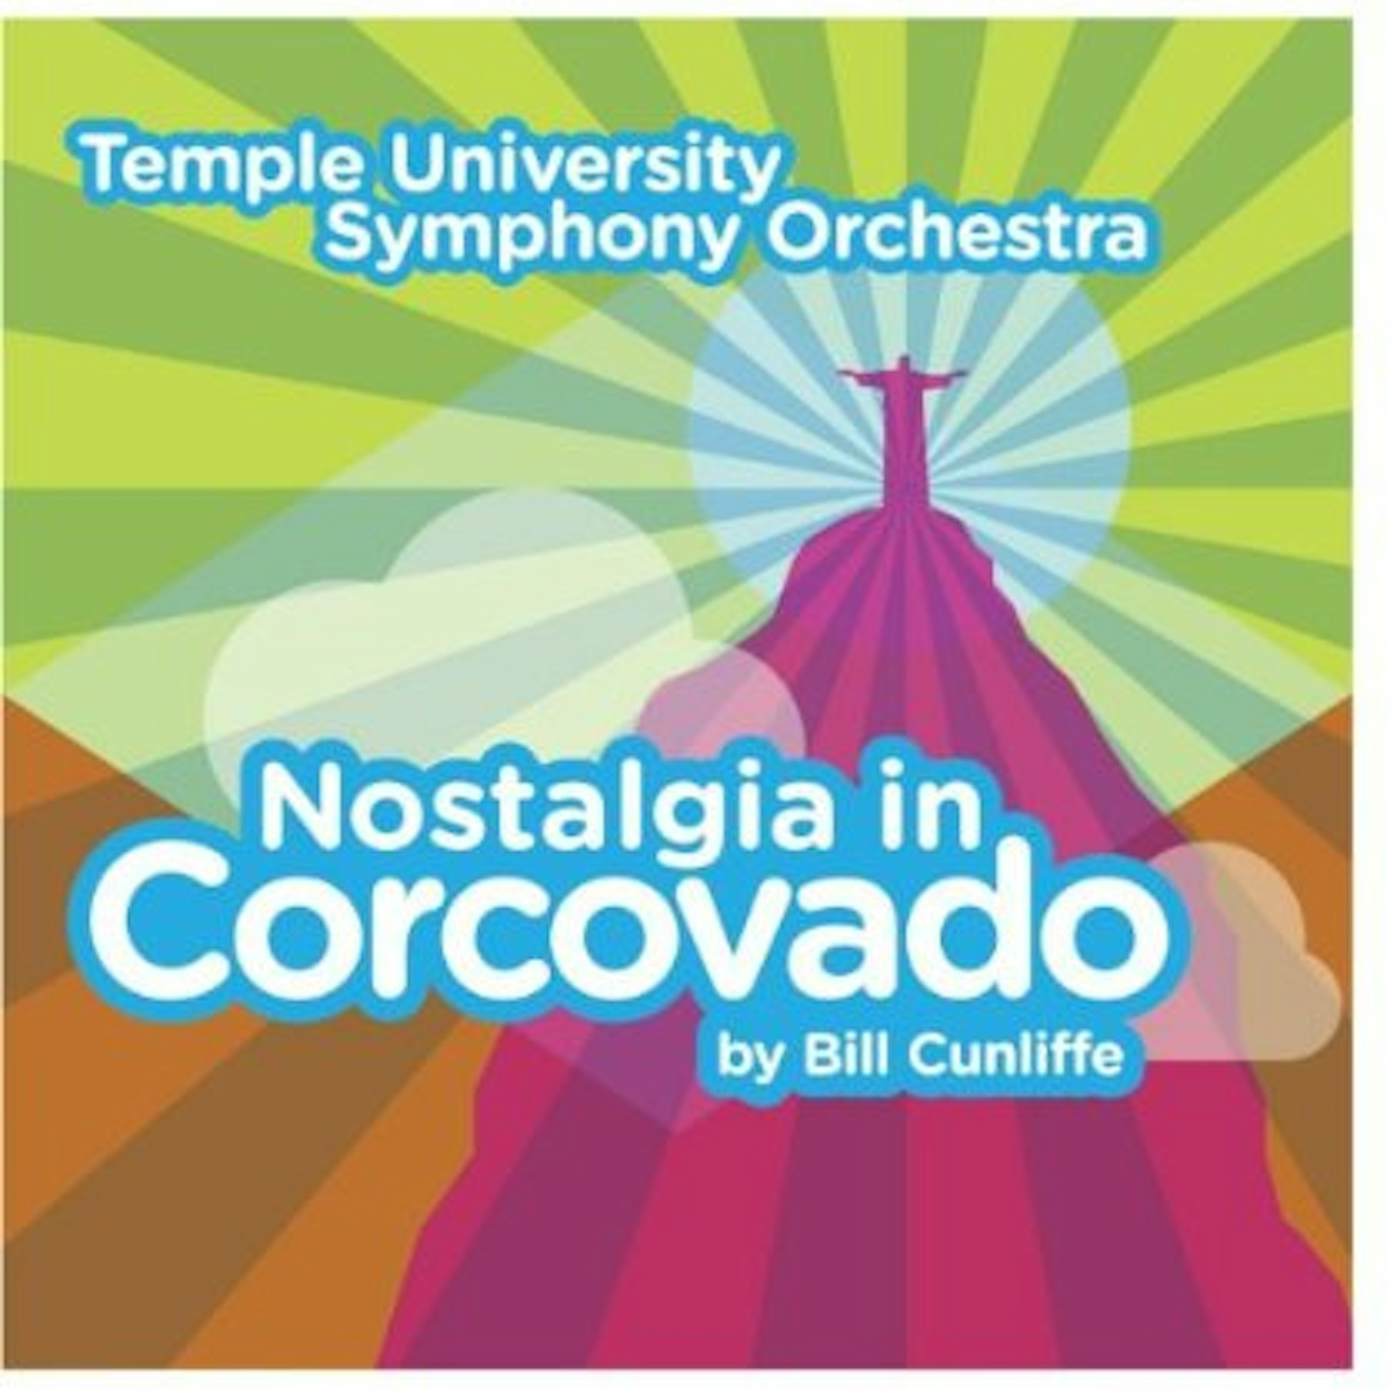 Temple University Symphony Orchestra NOSTALGIA IN CORCOVADO CD